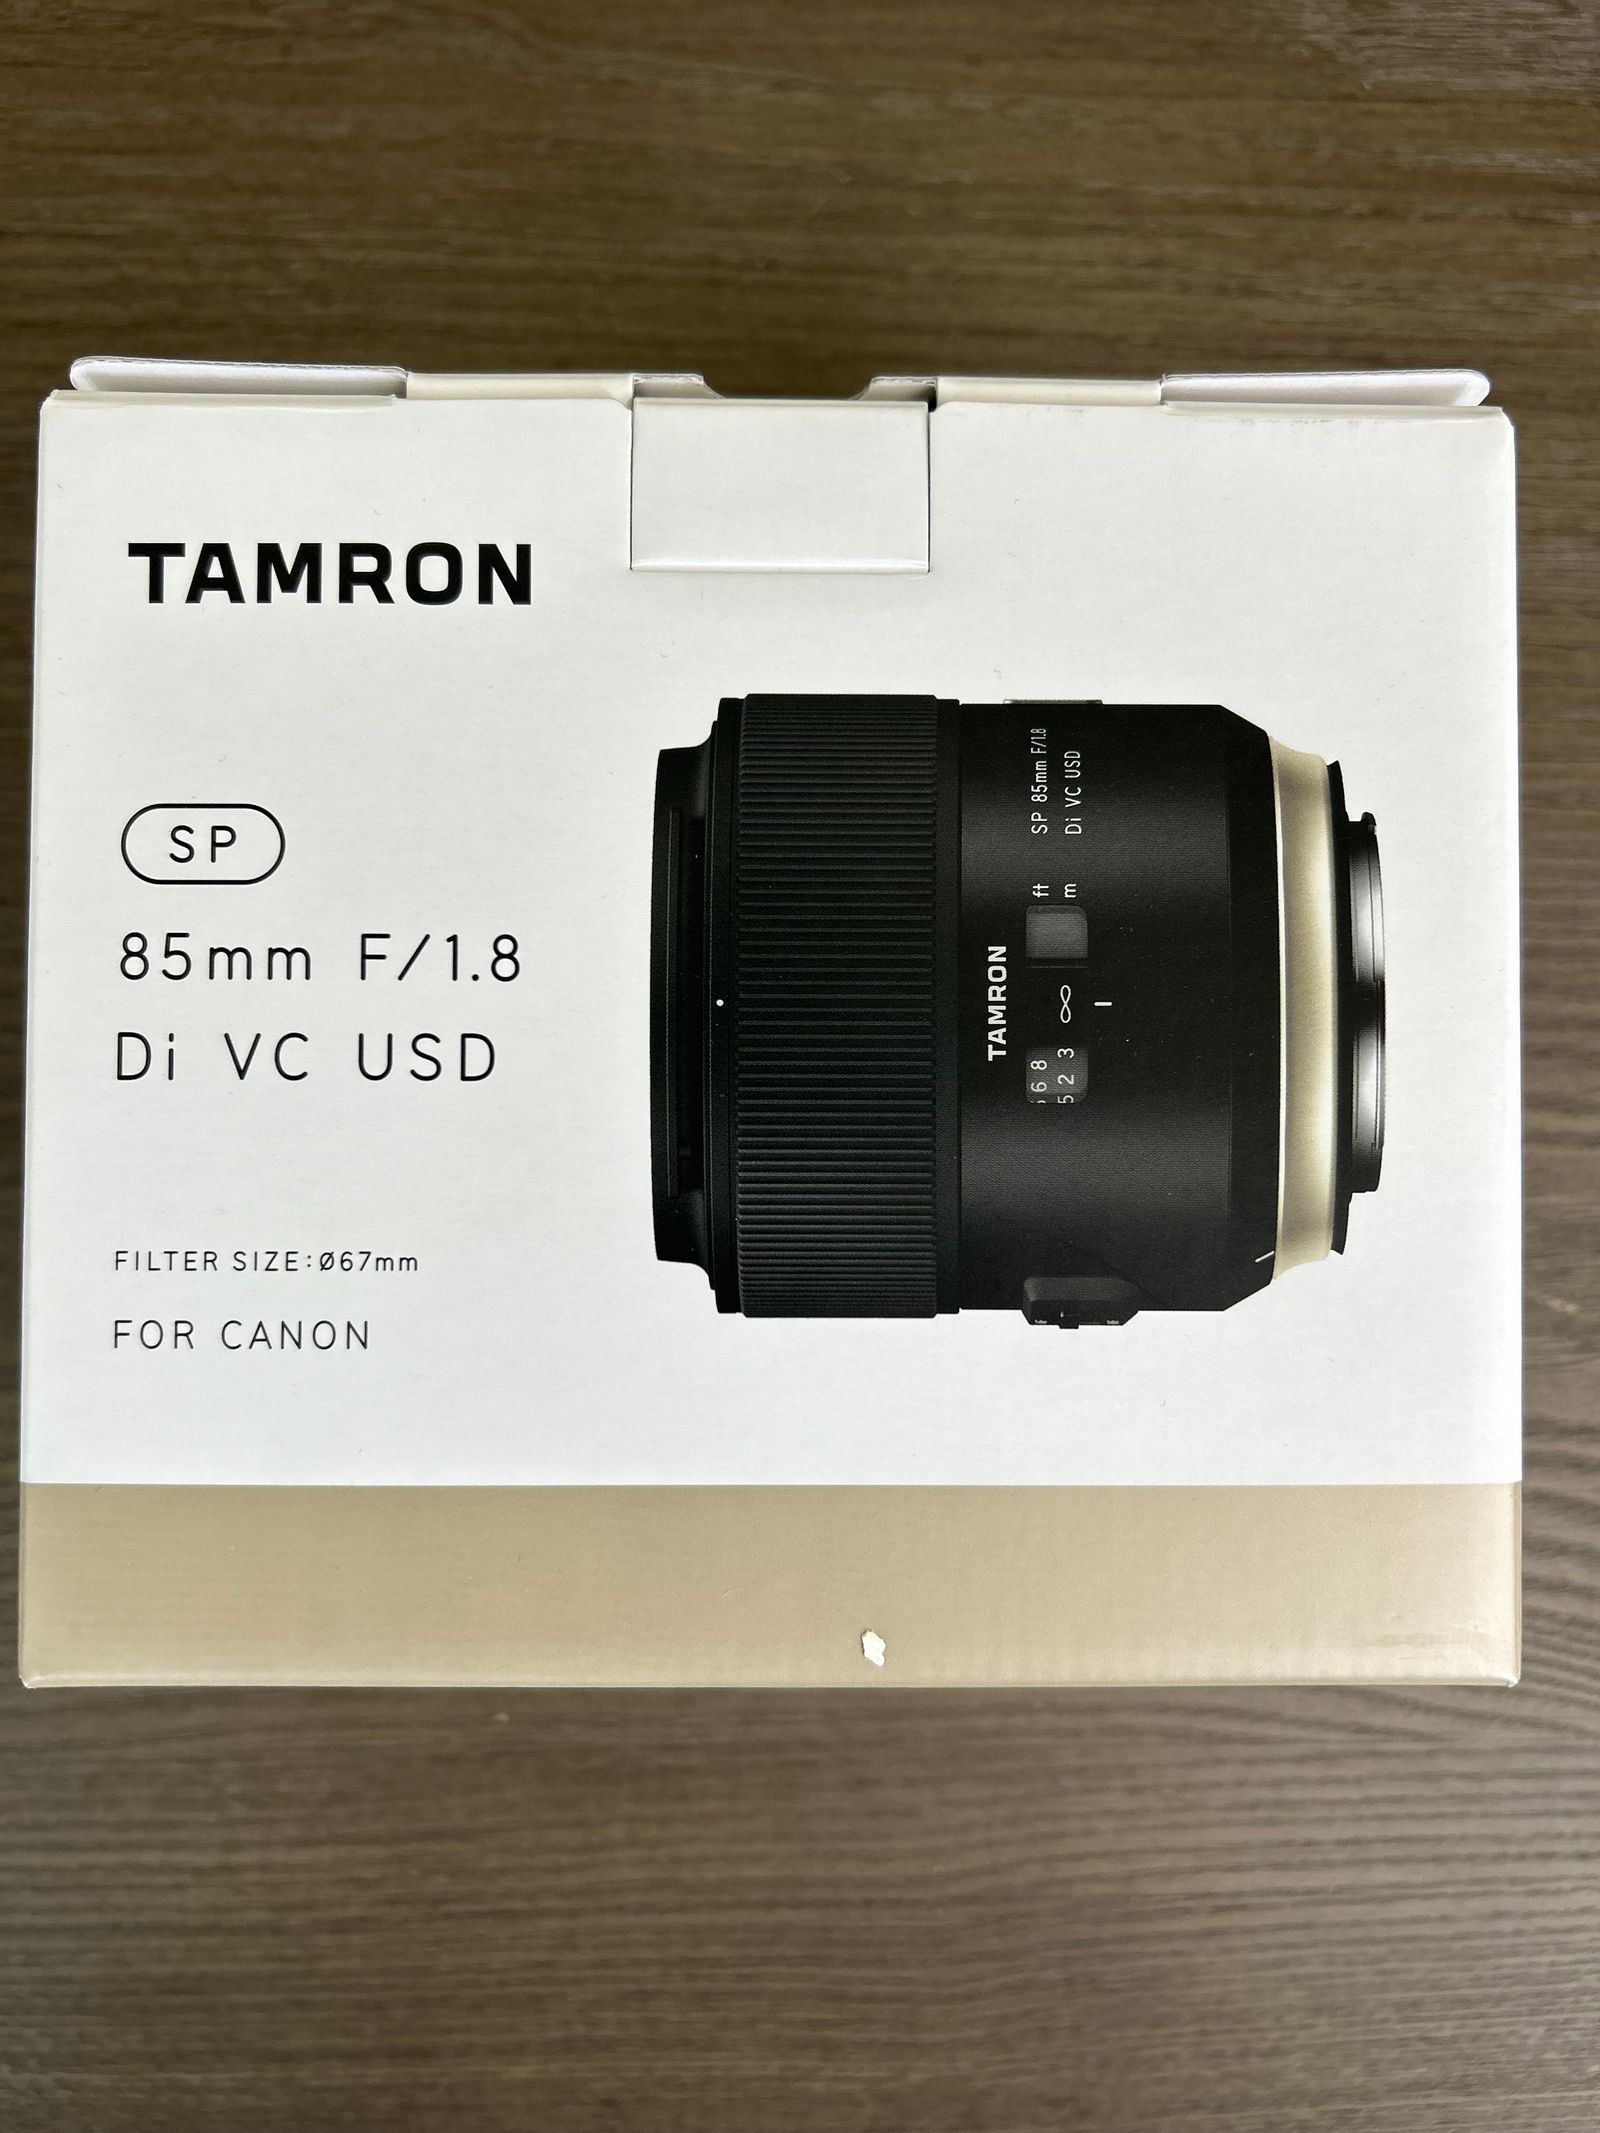 TAMRON - SP 85 mm F/1.8 Di VC USD for Nikon DSLR Cameras - Black - F016N  From KaiaRa On ...